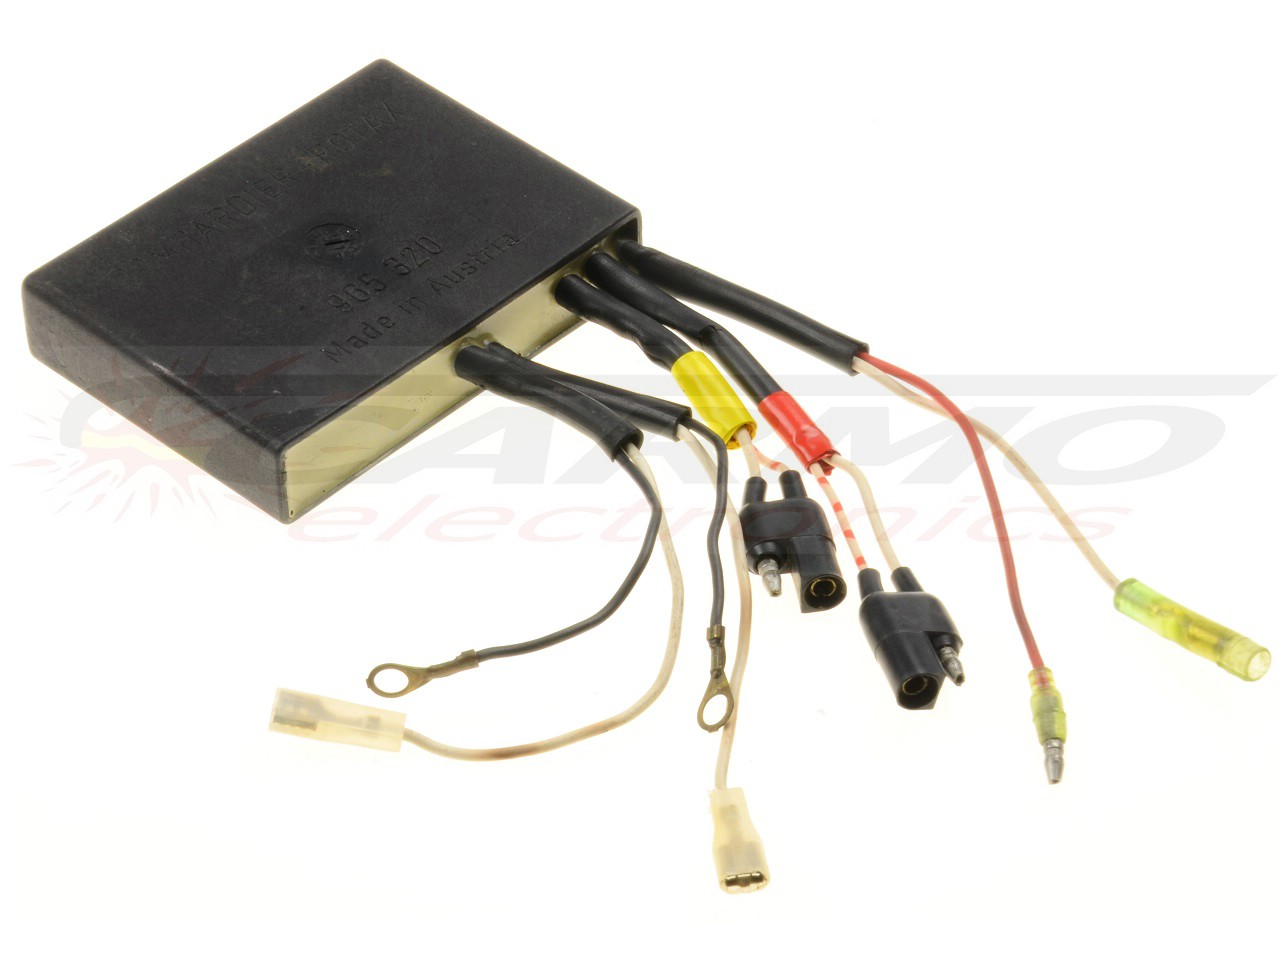 Rotax 912A 912UL electronic box SMD module igniter ignition module CDI Box bombardier (965-320, 912 060 PKT)